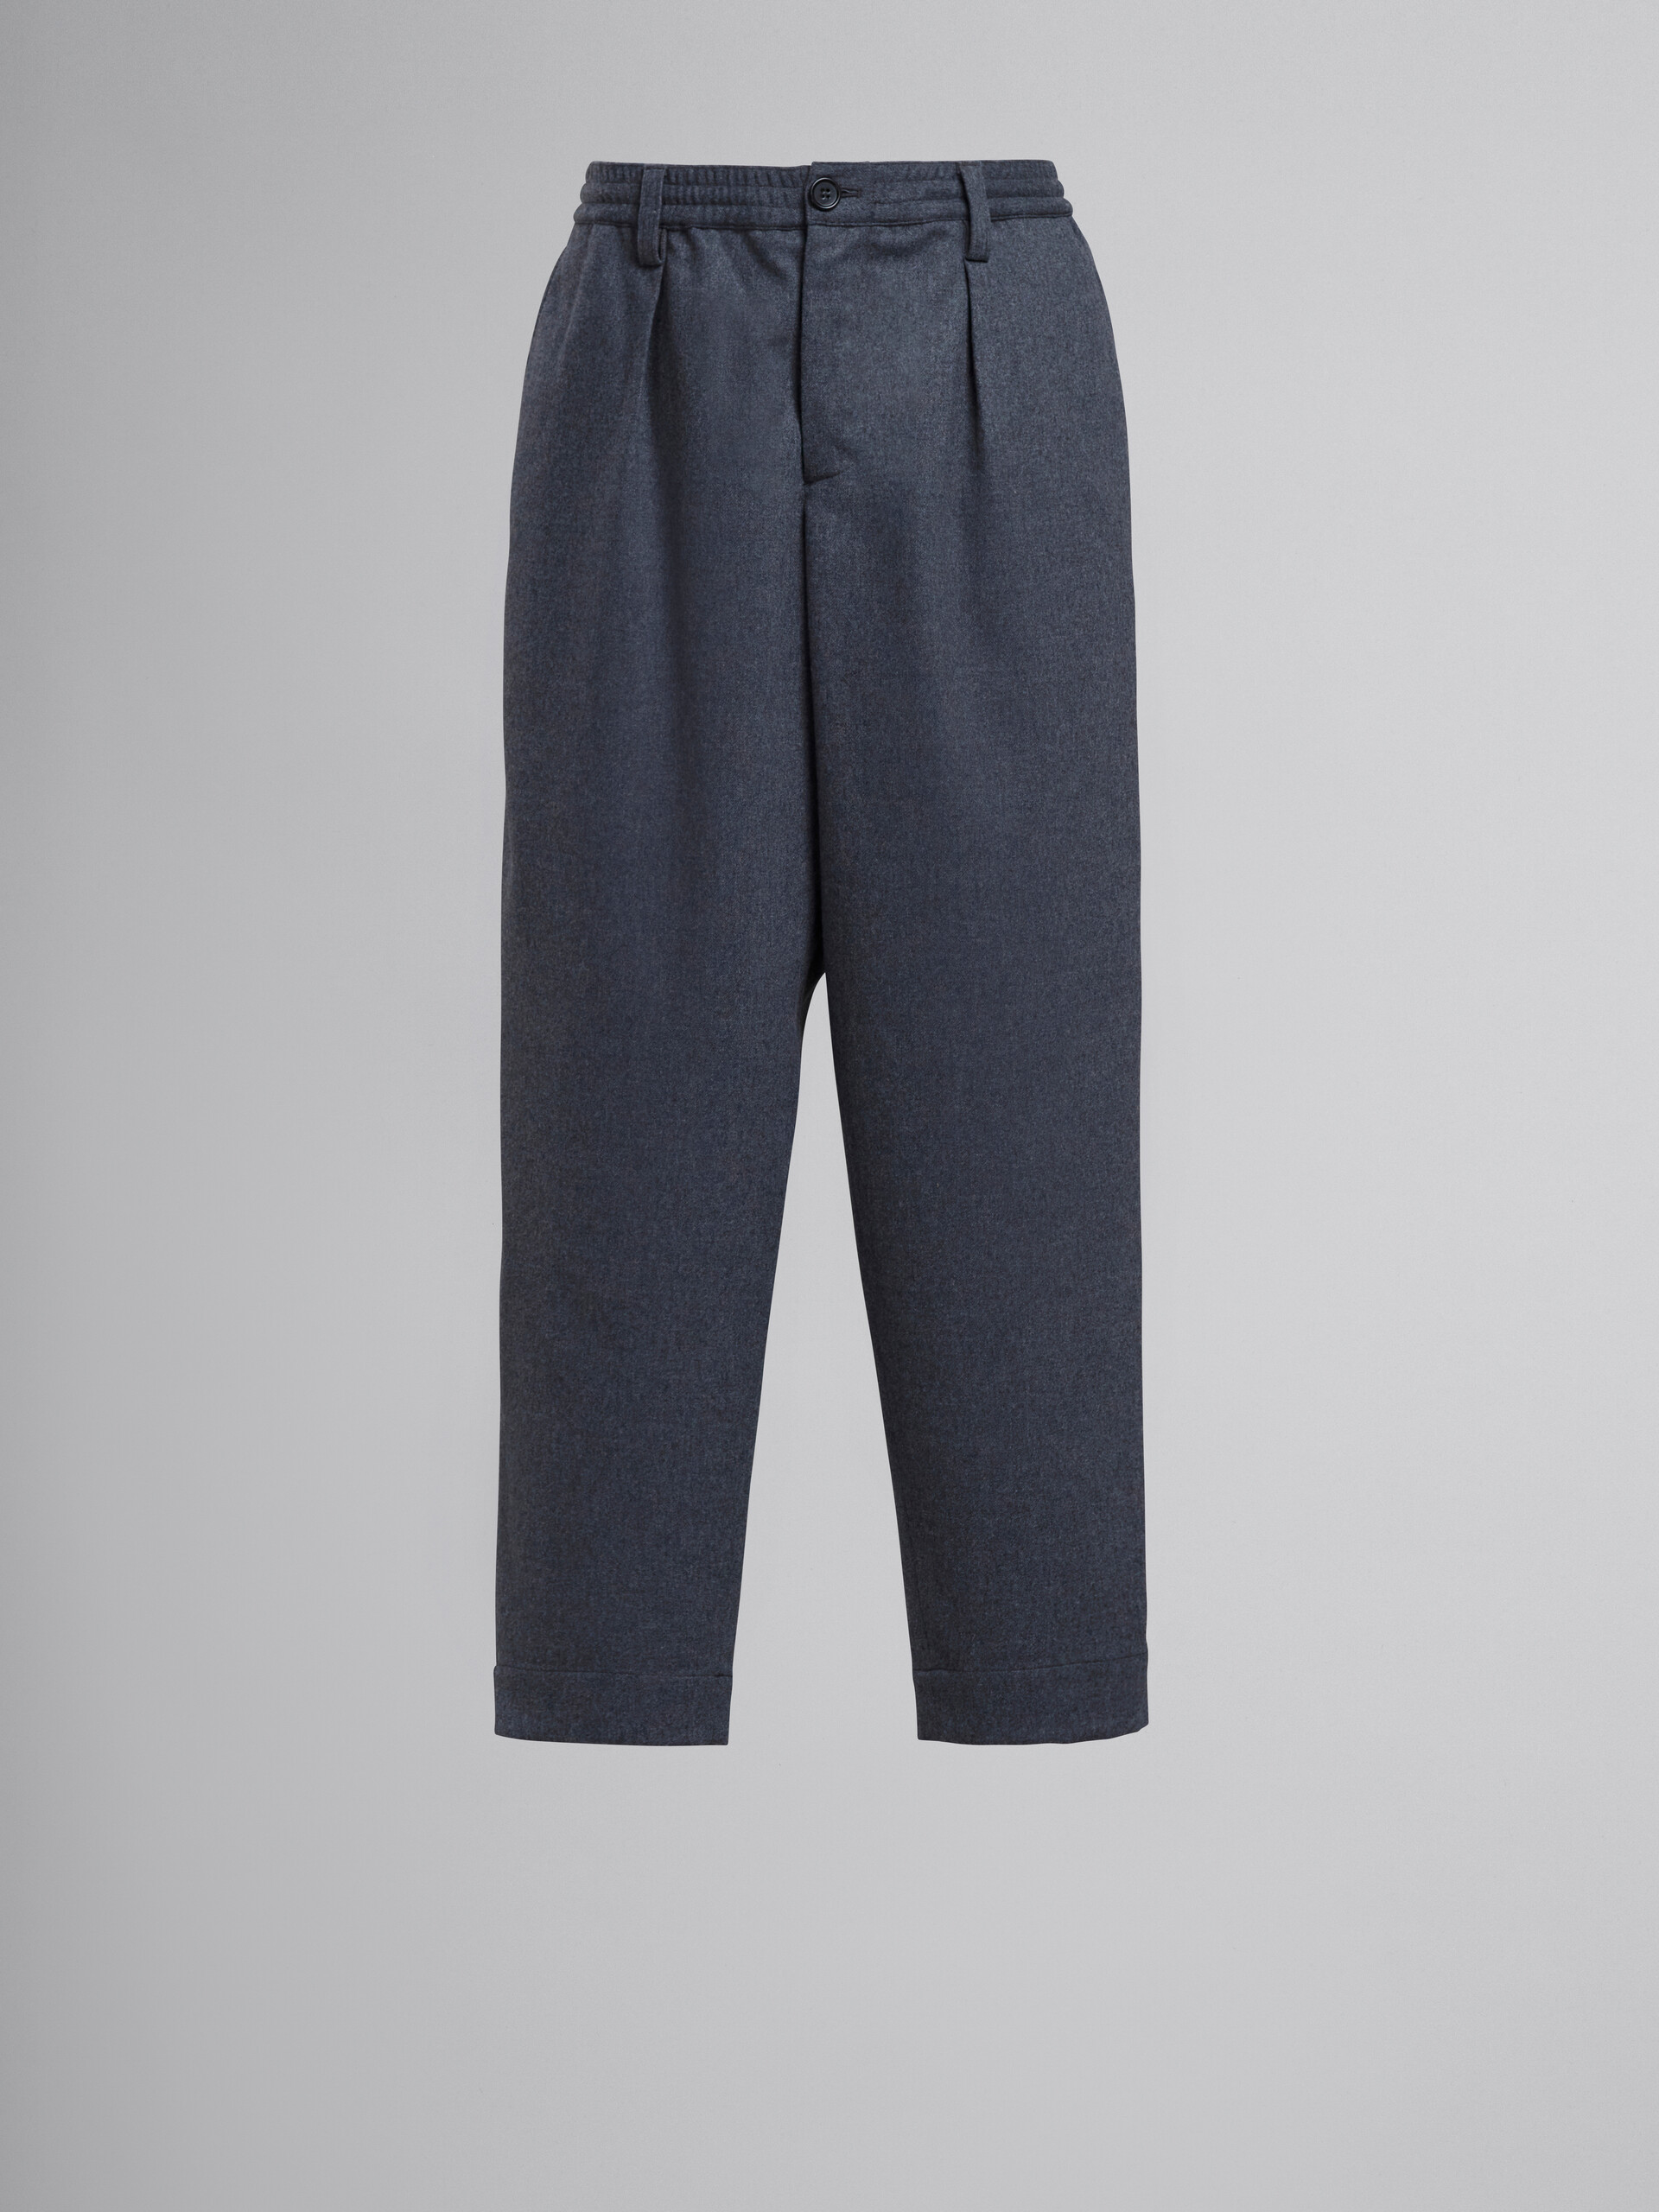 Grey wool cropped pants - Pants - Image 1